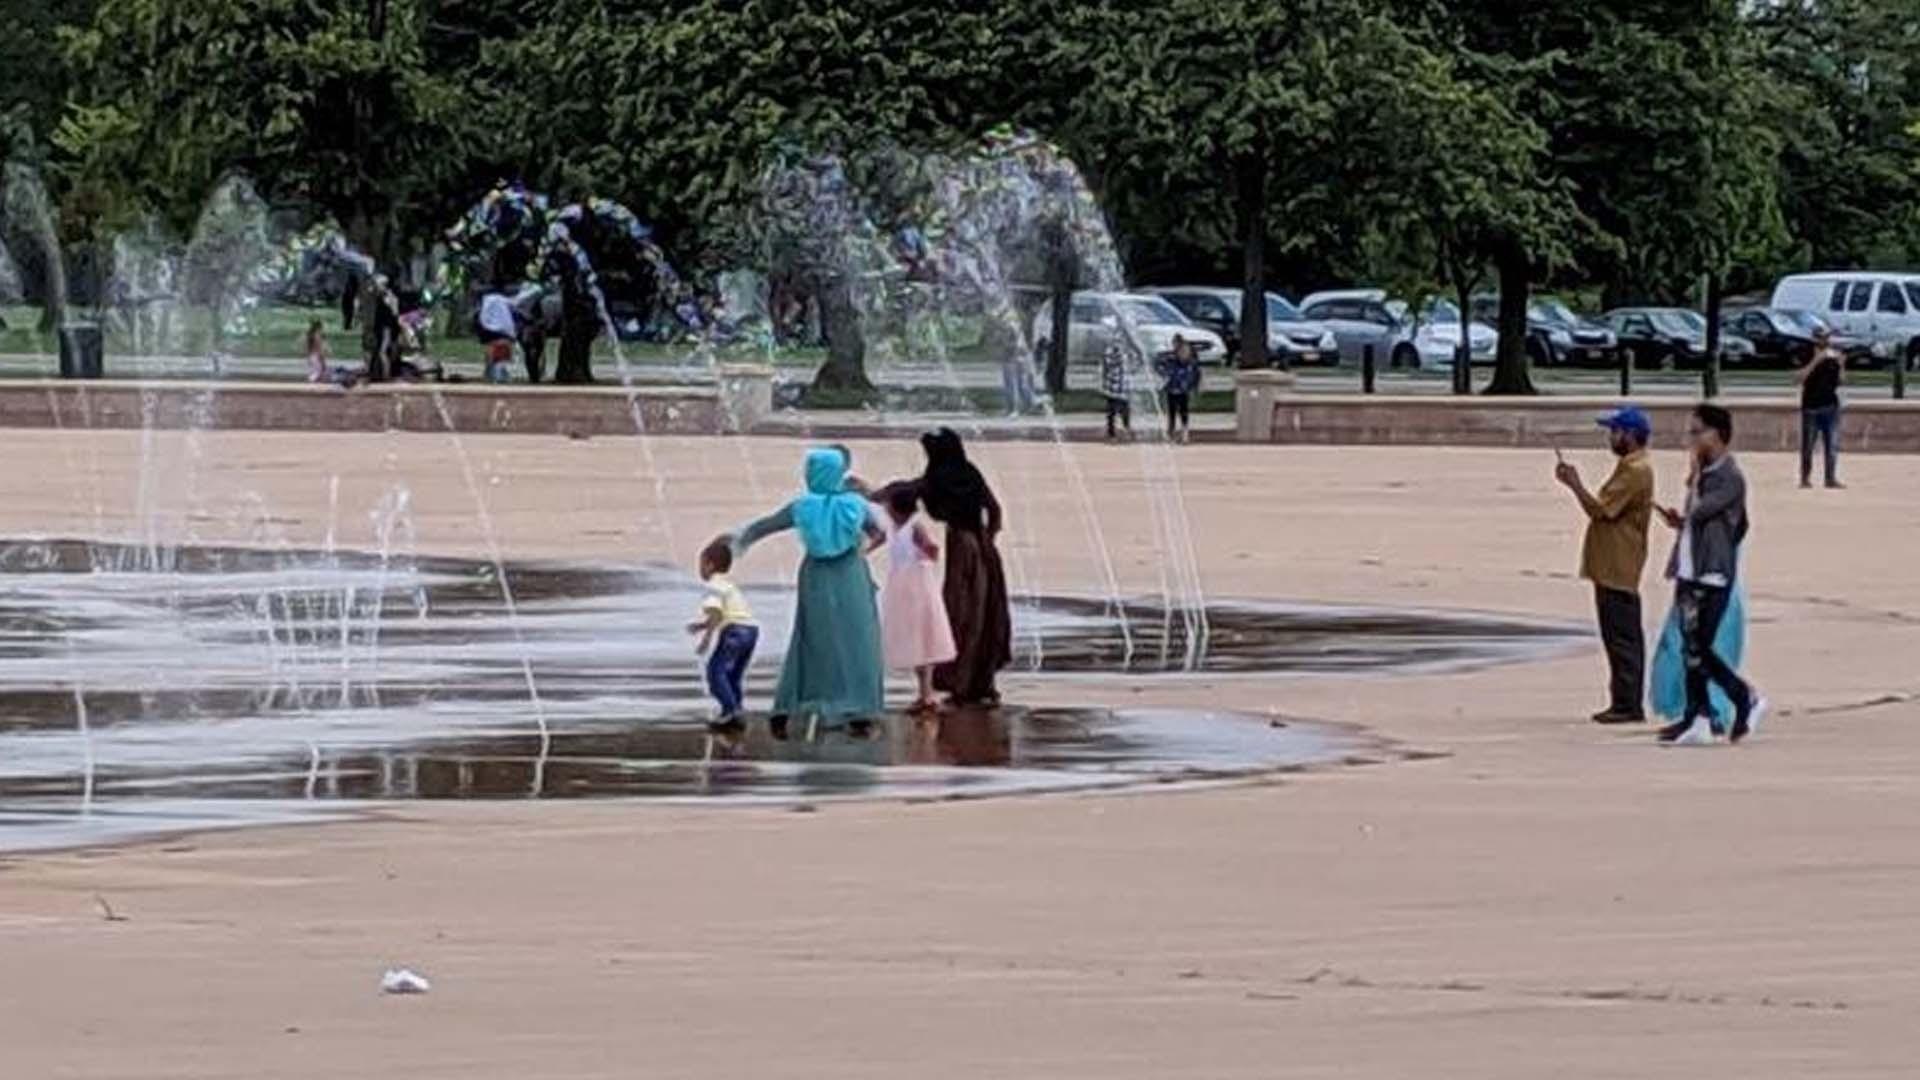 Muslim family enjoying the splash pad at Martin Luther King Jr. Park in Buffalo